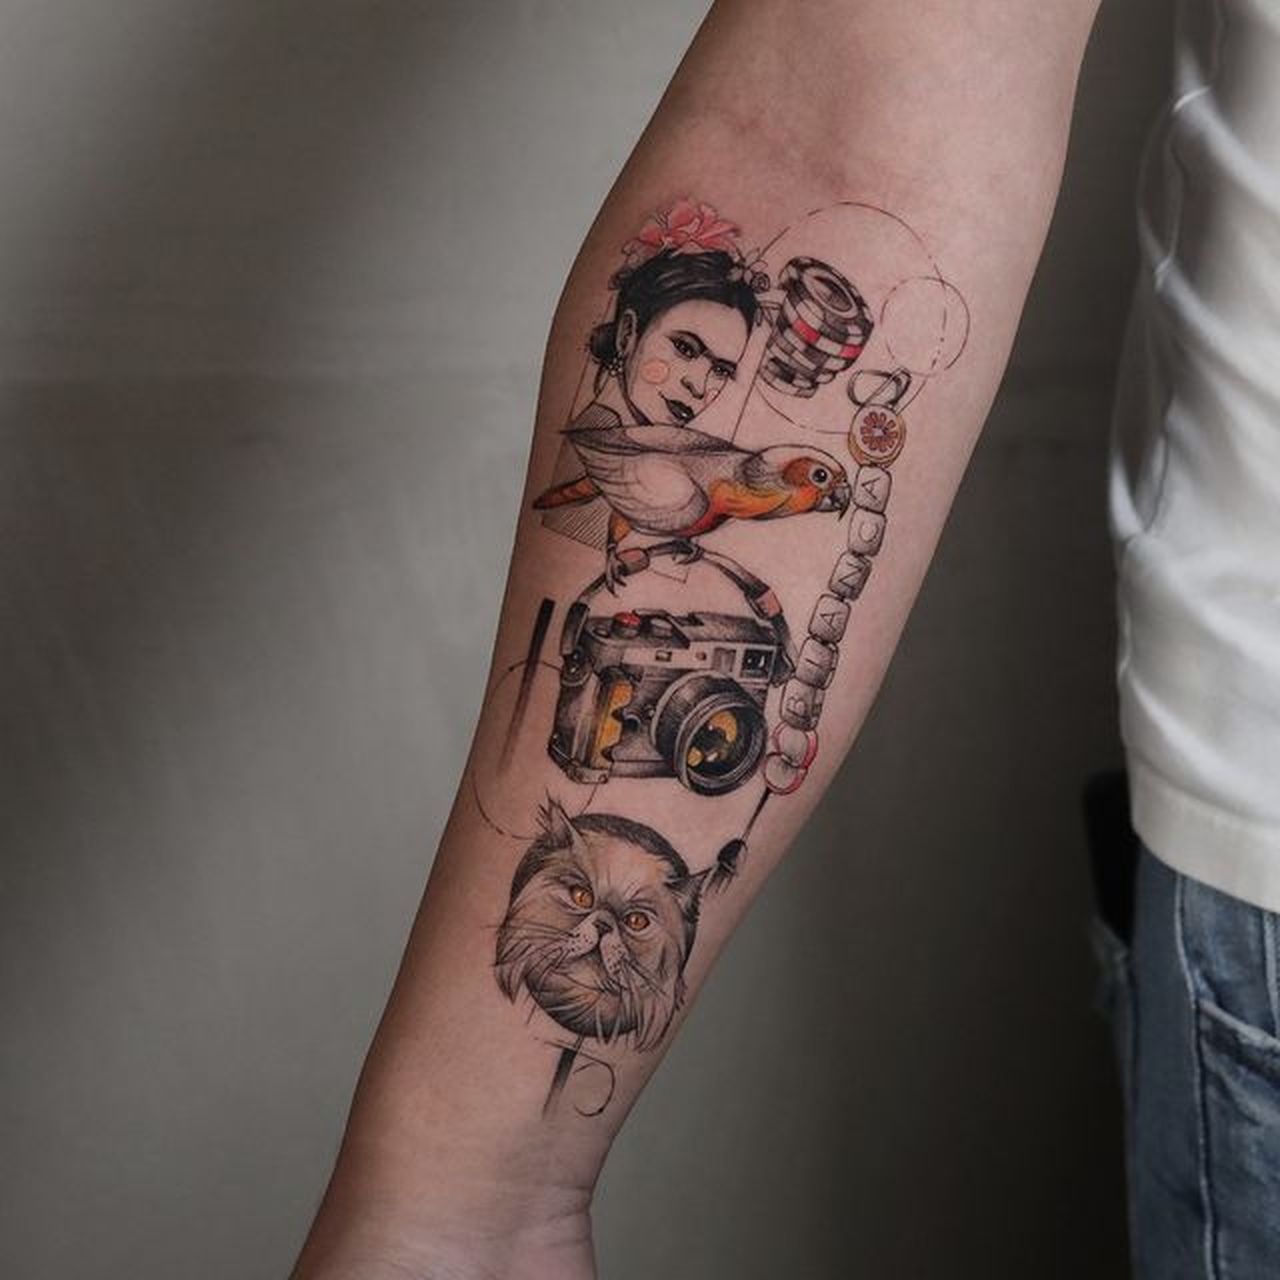 Dexastudios tatuagens no Porto - Tattoos